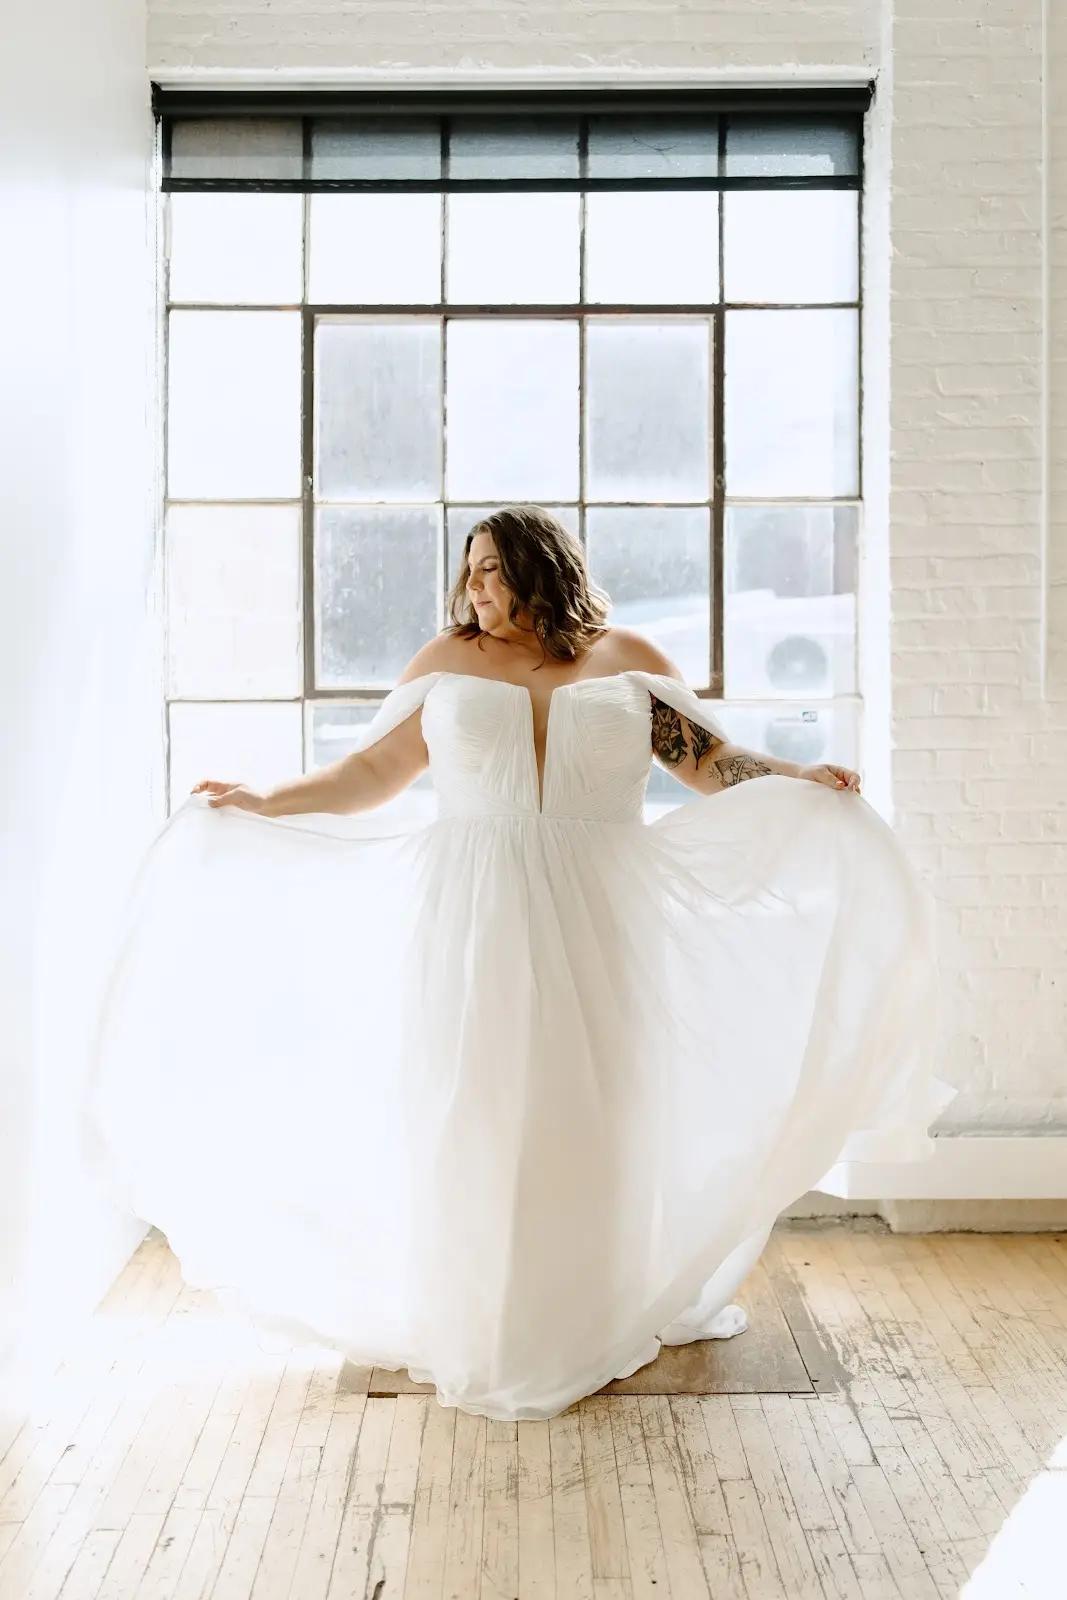 model wearing a wedding gown